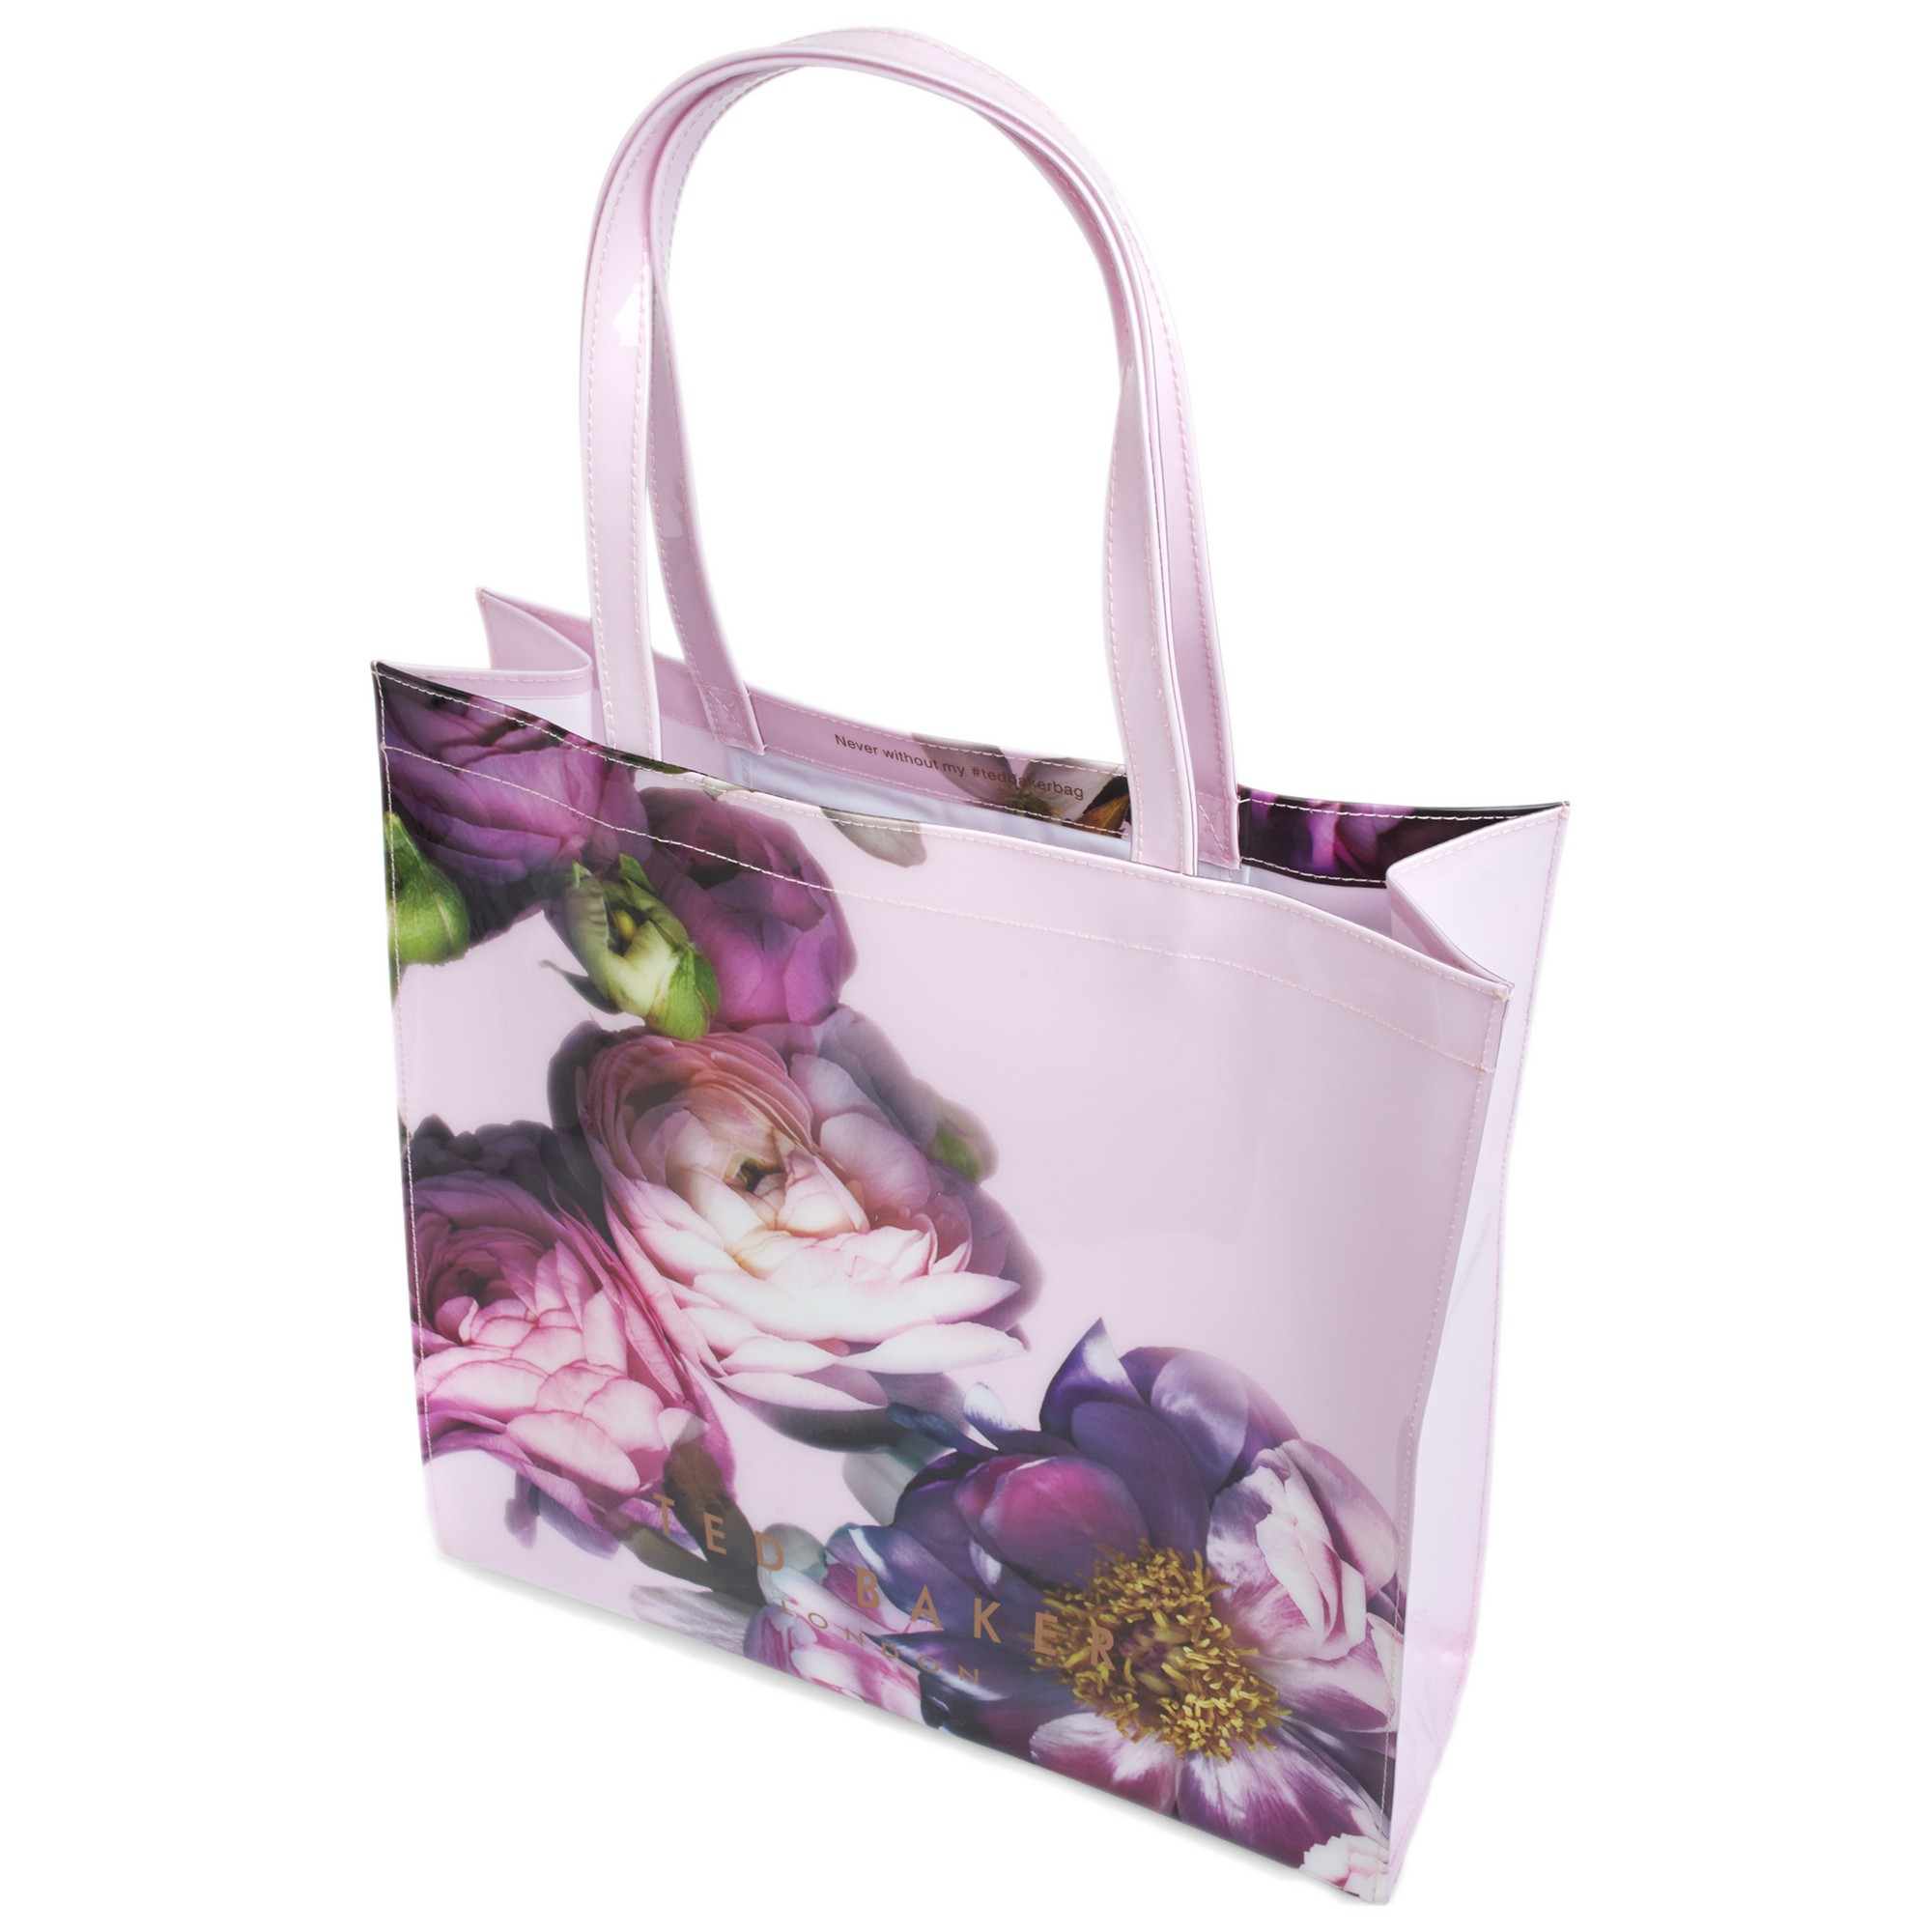 Ted Baker Sunlit Floral Large Icon Shopper Bag in Pale Pink (Pink) - Lyst